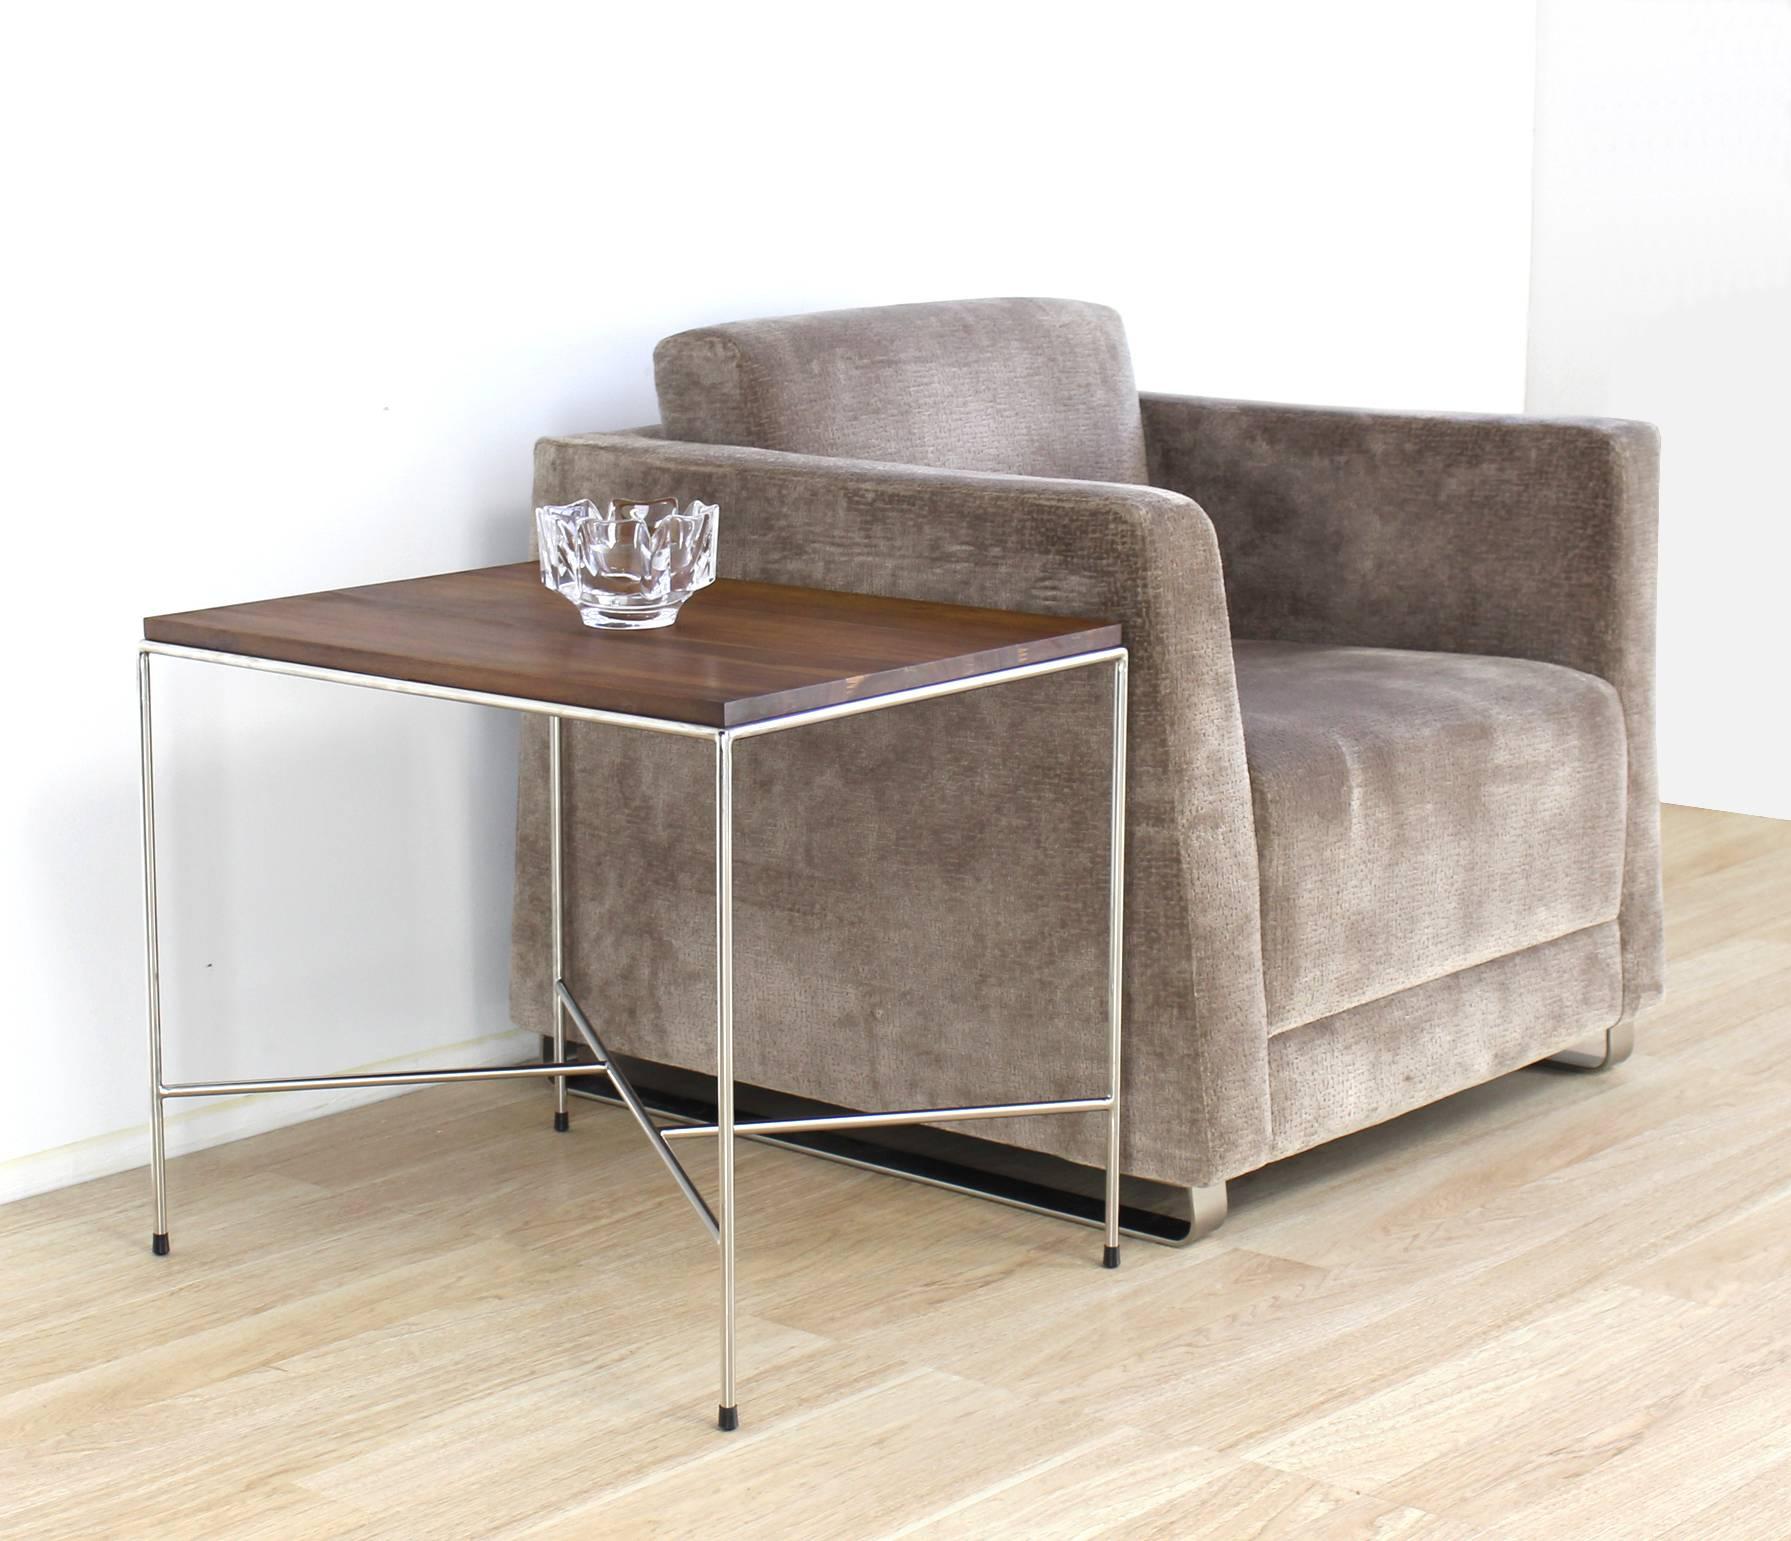 Modern upholstered lounge club box shape chair by Bernhardt.